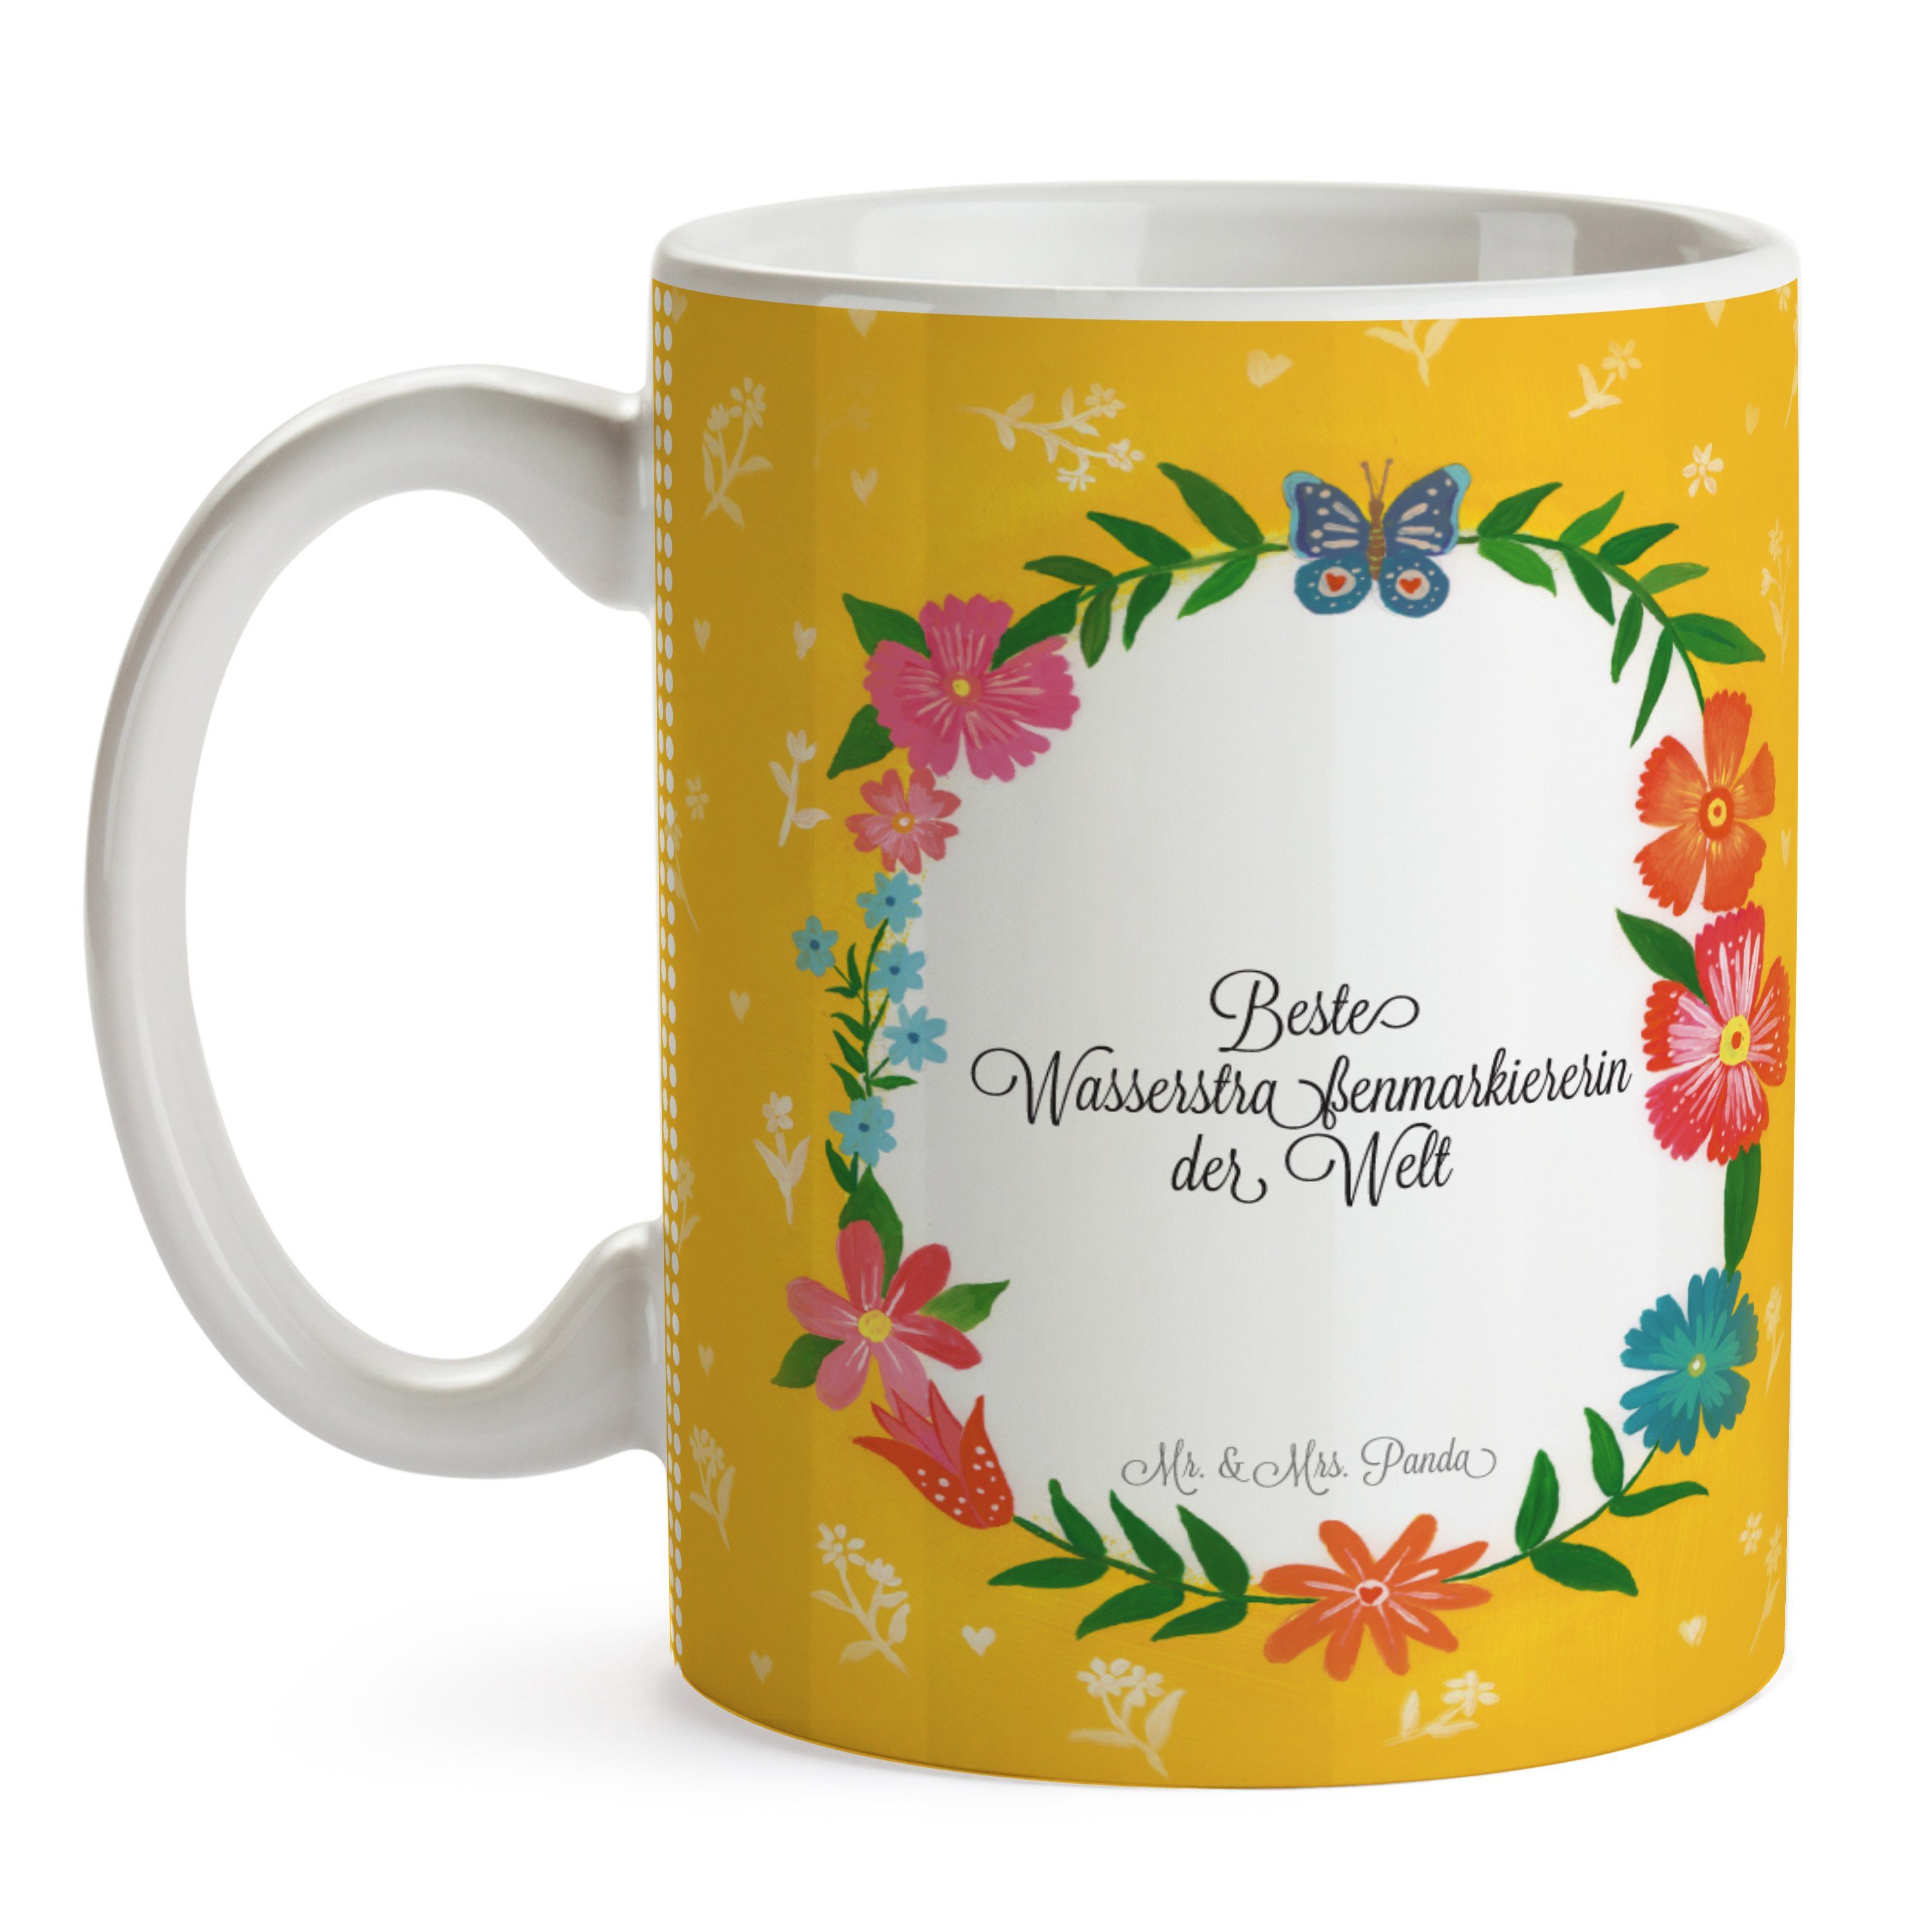 Mr. & Mrs. Tasse Wasserstraßenmarkiererin - Panda Geschenk, Gratulation, Keramik Kaffeebecher, Kaffe